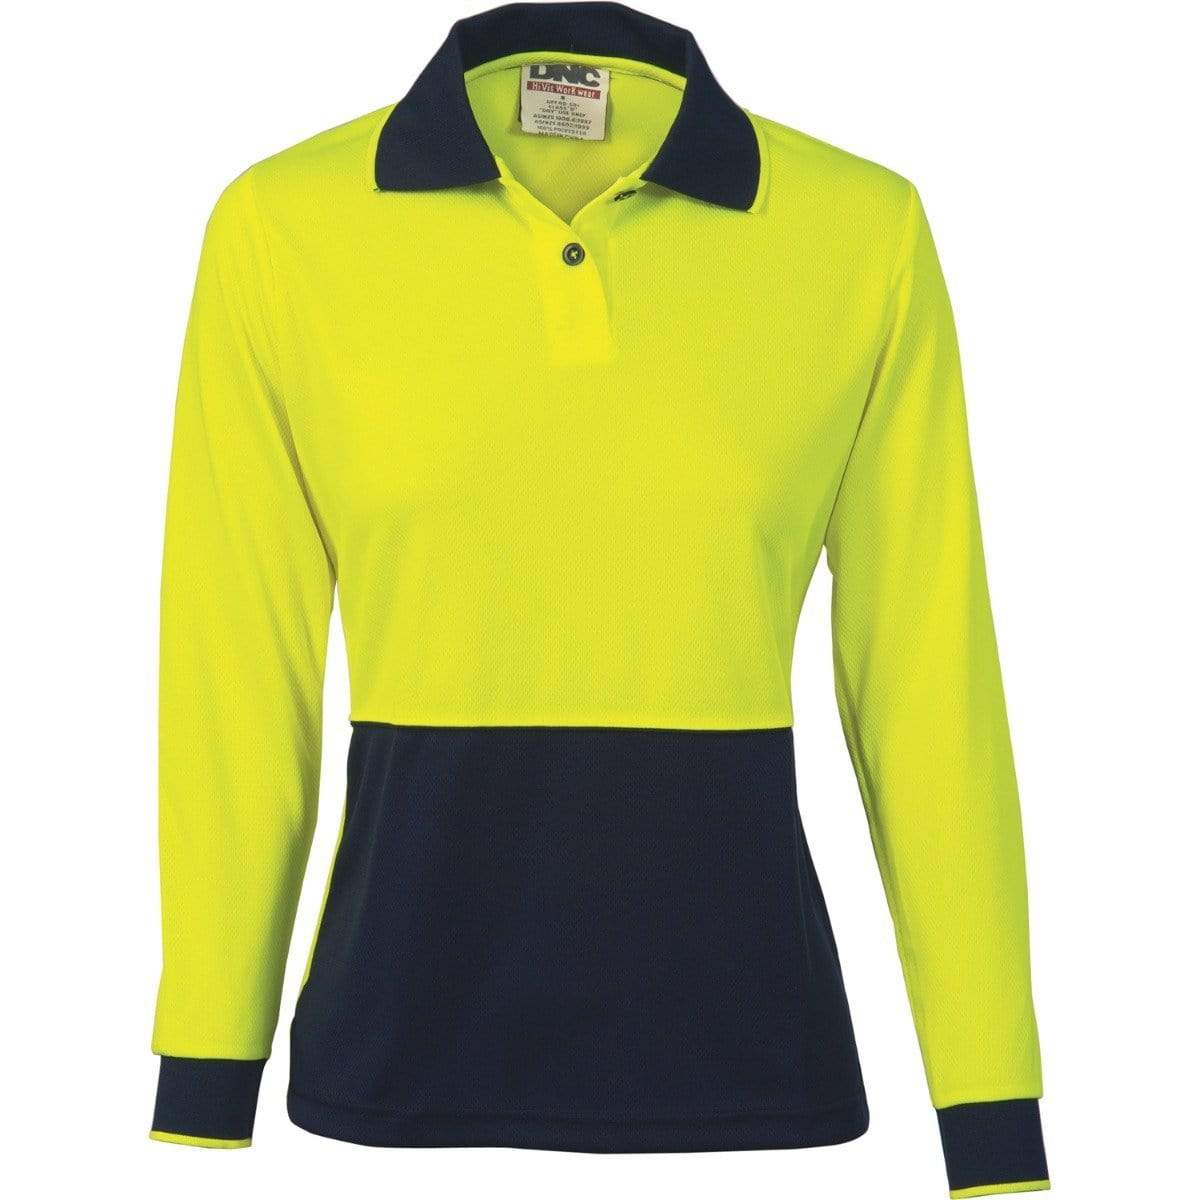 Dnc Workwear Ladies Hi-vis Two-tone Long Sleeve Polo Shirt - 3898 Work Wear DNC Workwear Yellow/Navy 8 